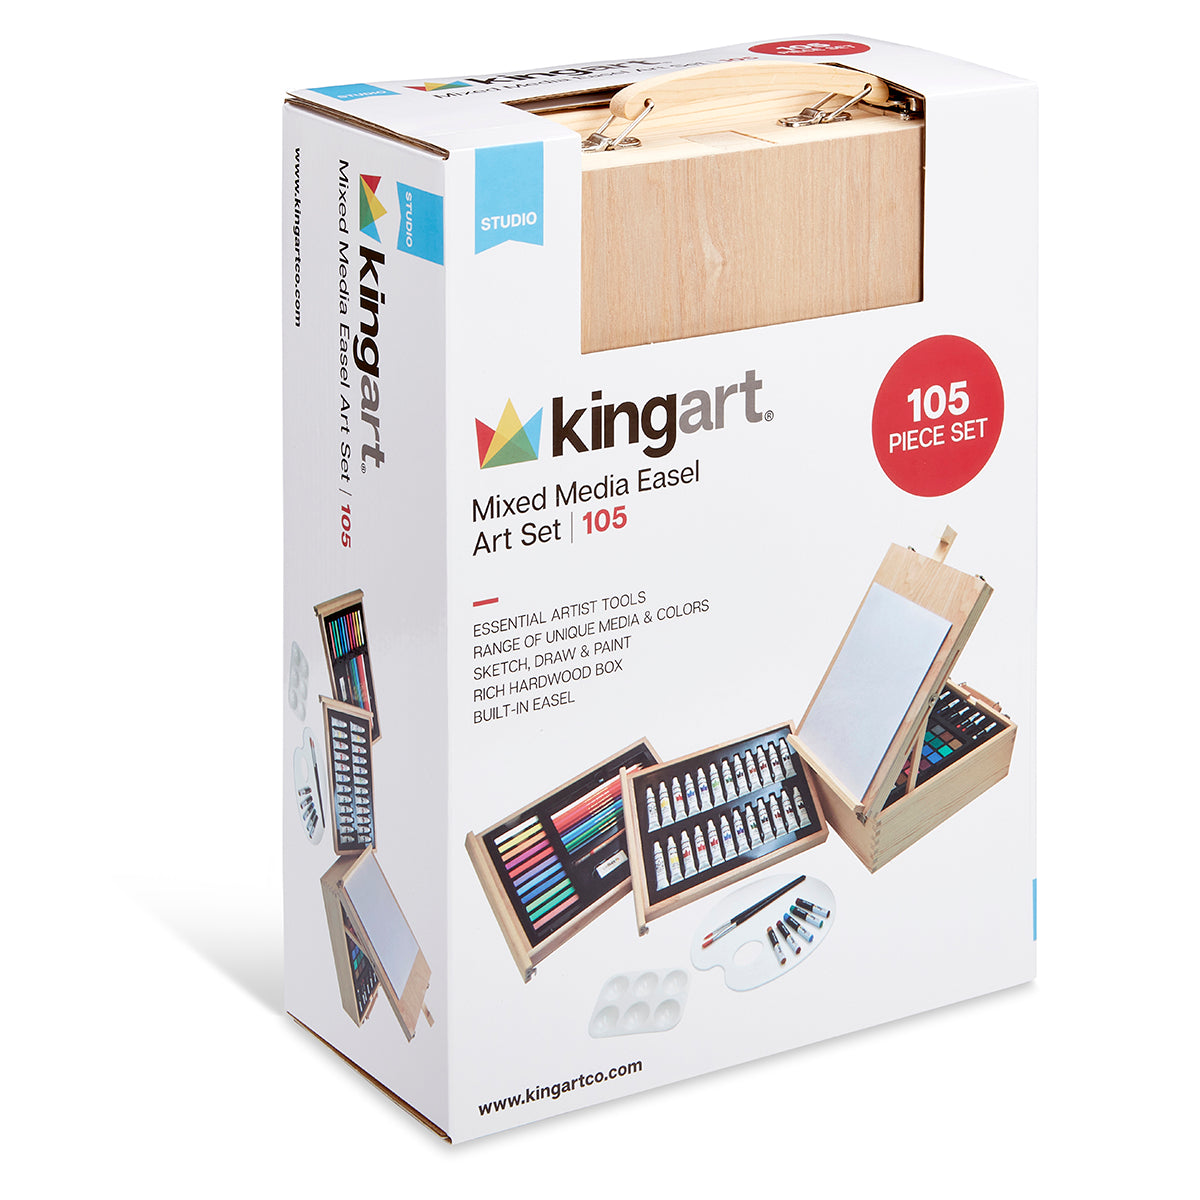  iStarcas Art Supplies, 325pcs Art kit, Drawing